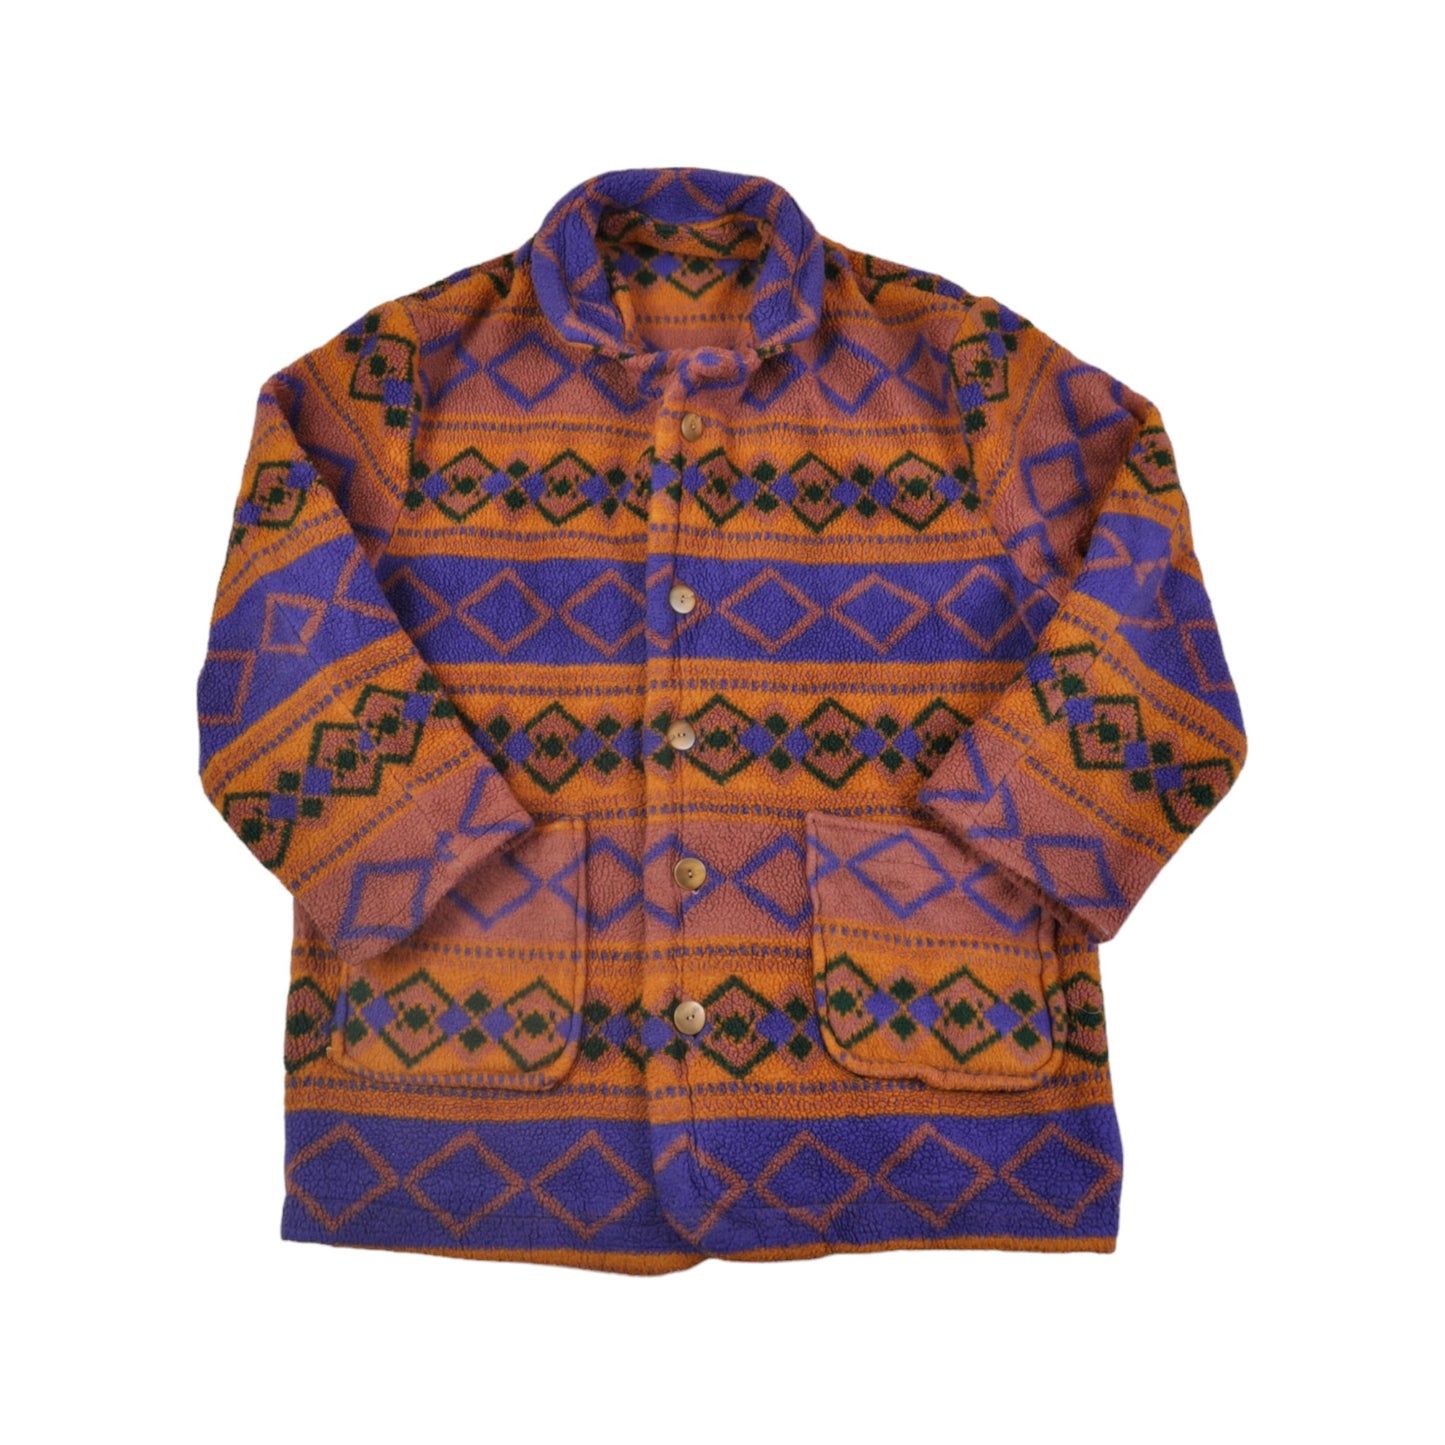 Vintage Fleece Jacket Retro Pattern Orange/Blue Ladies XL